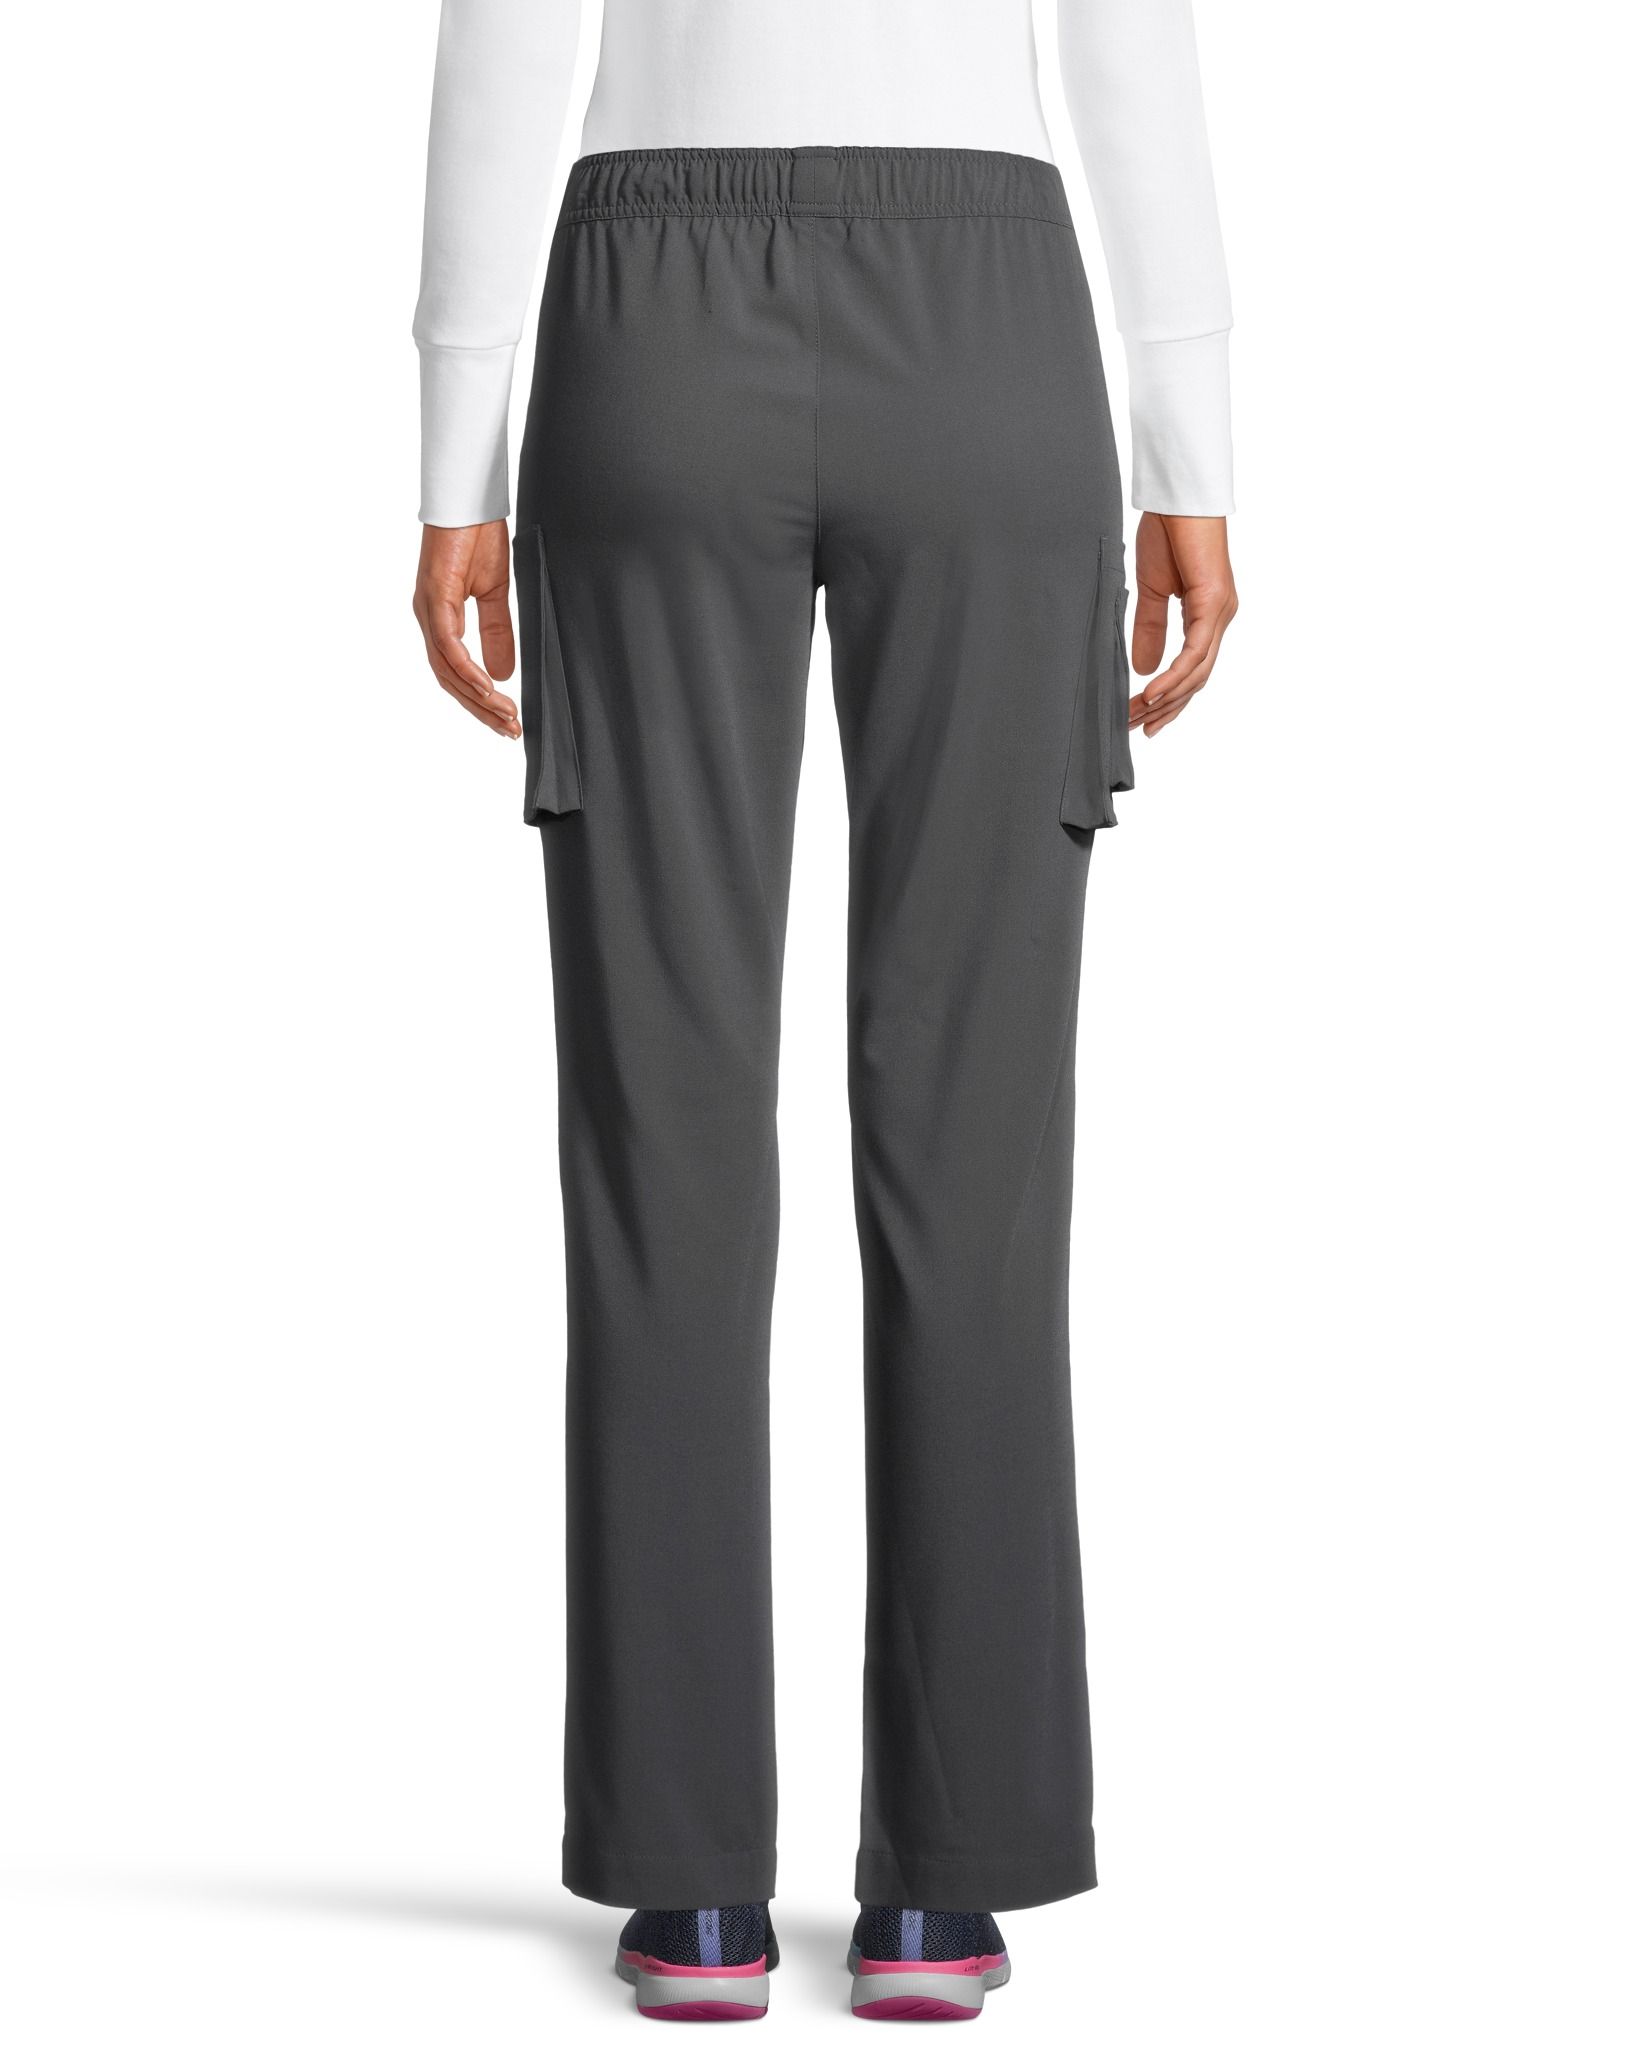 Long Pants For Women Women's Loose Wide Leg Pants High Waist Straight Pants  Casual Pants Gray XL JE